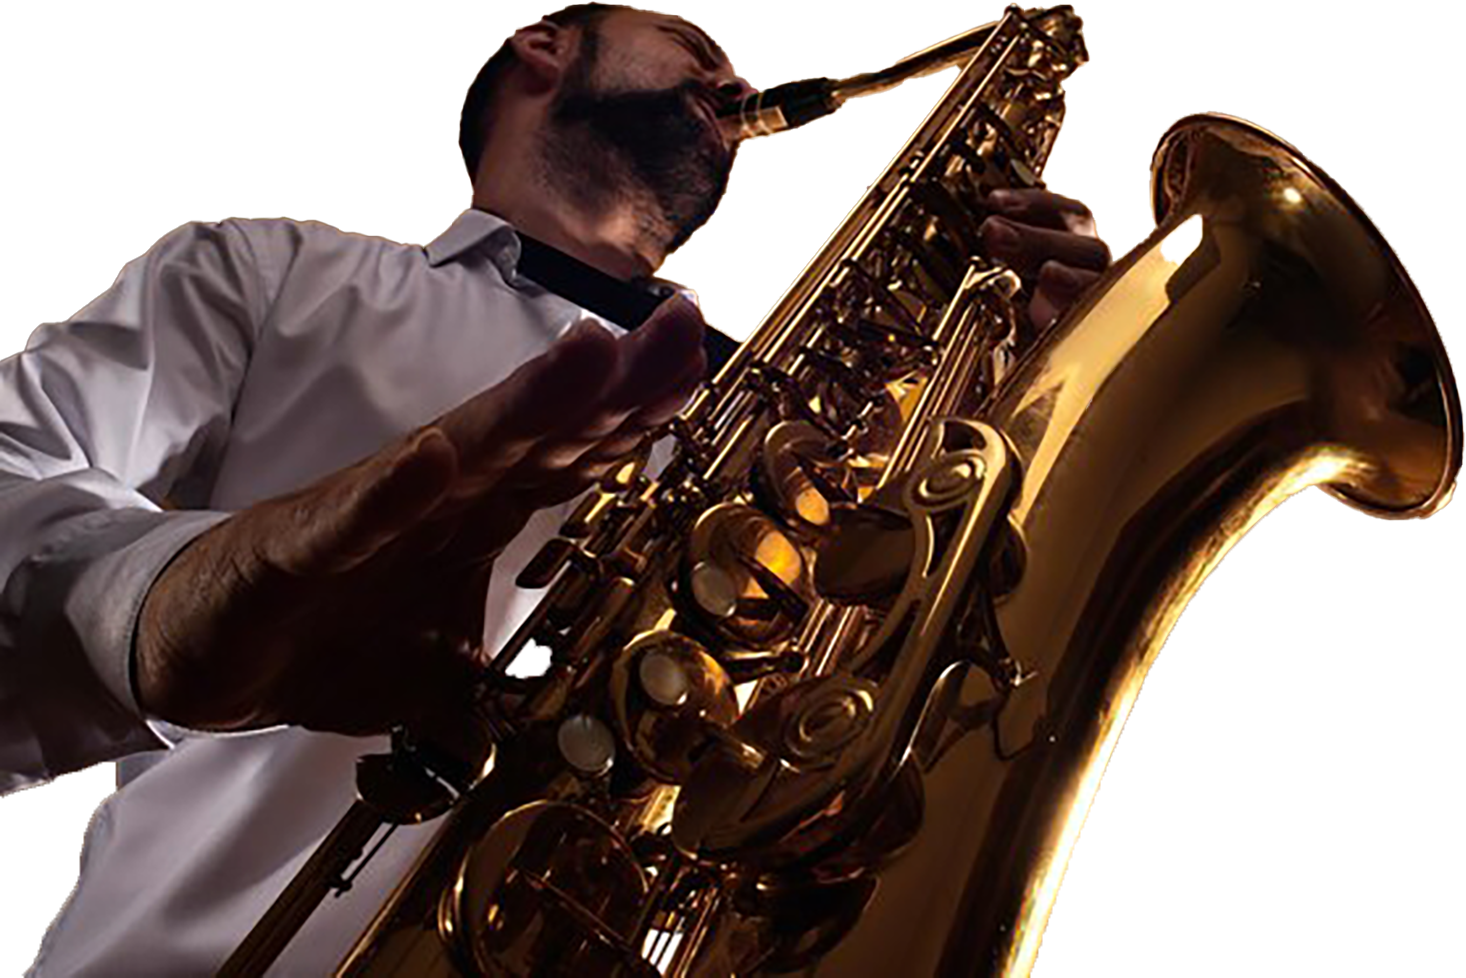 sax player 2